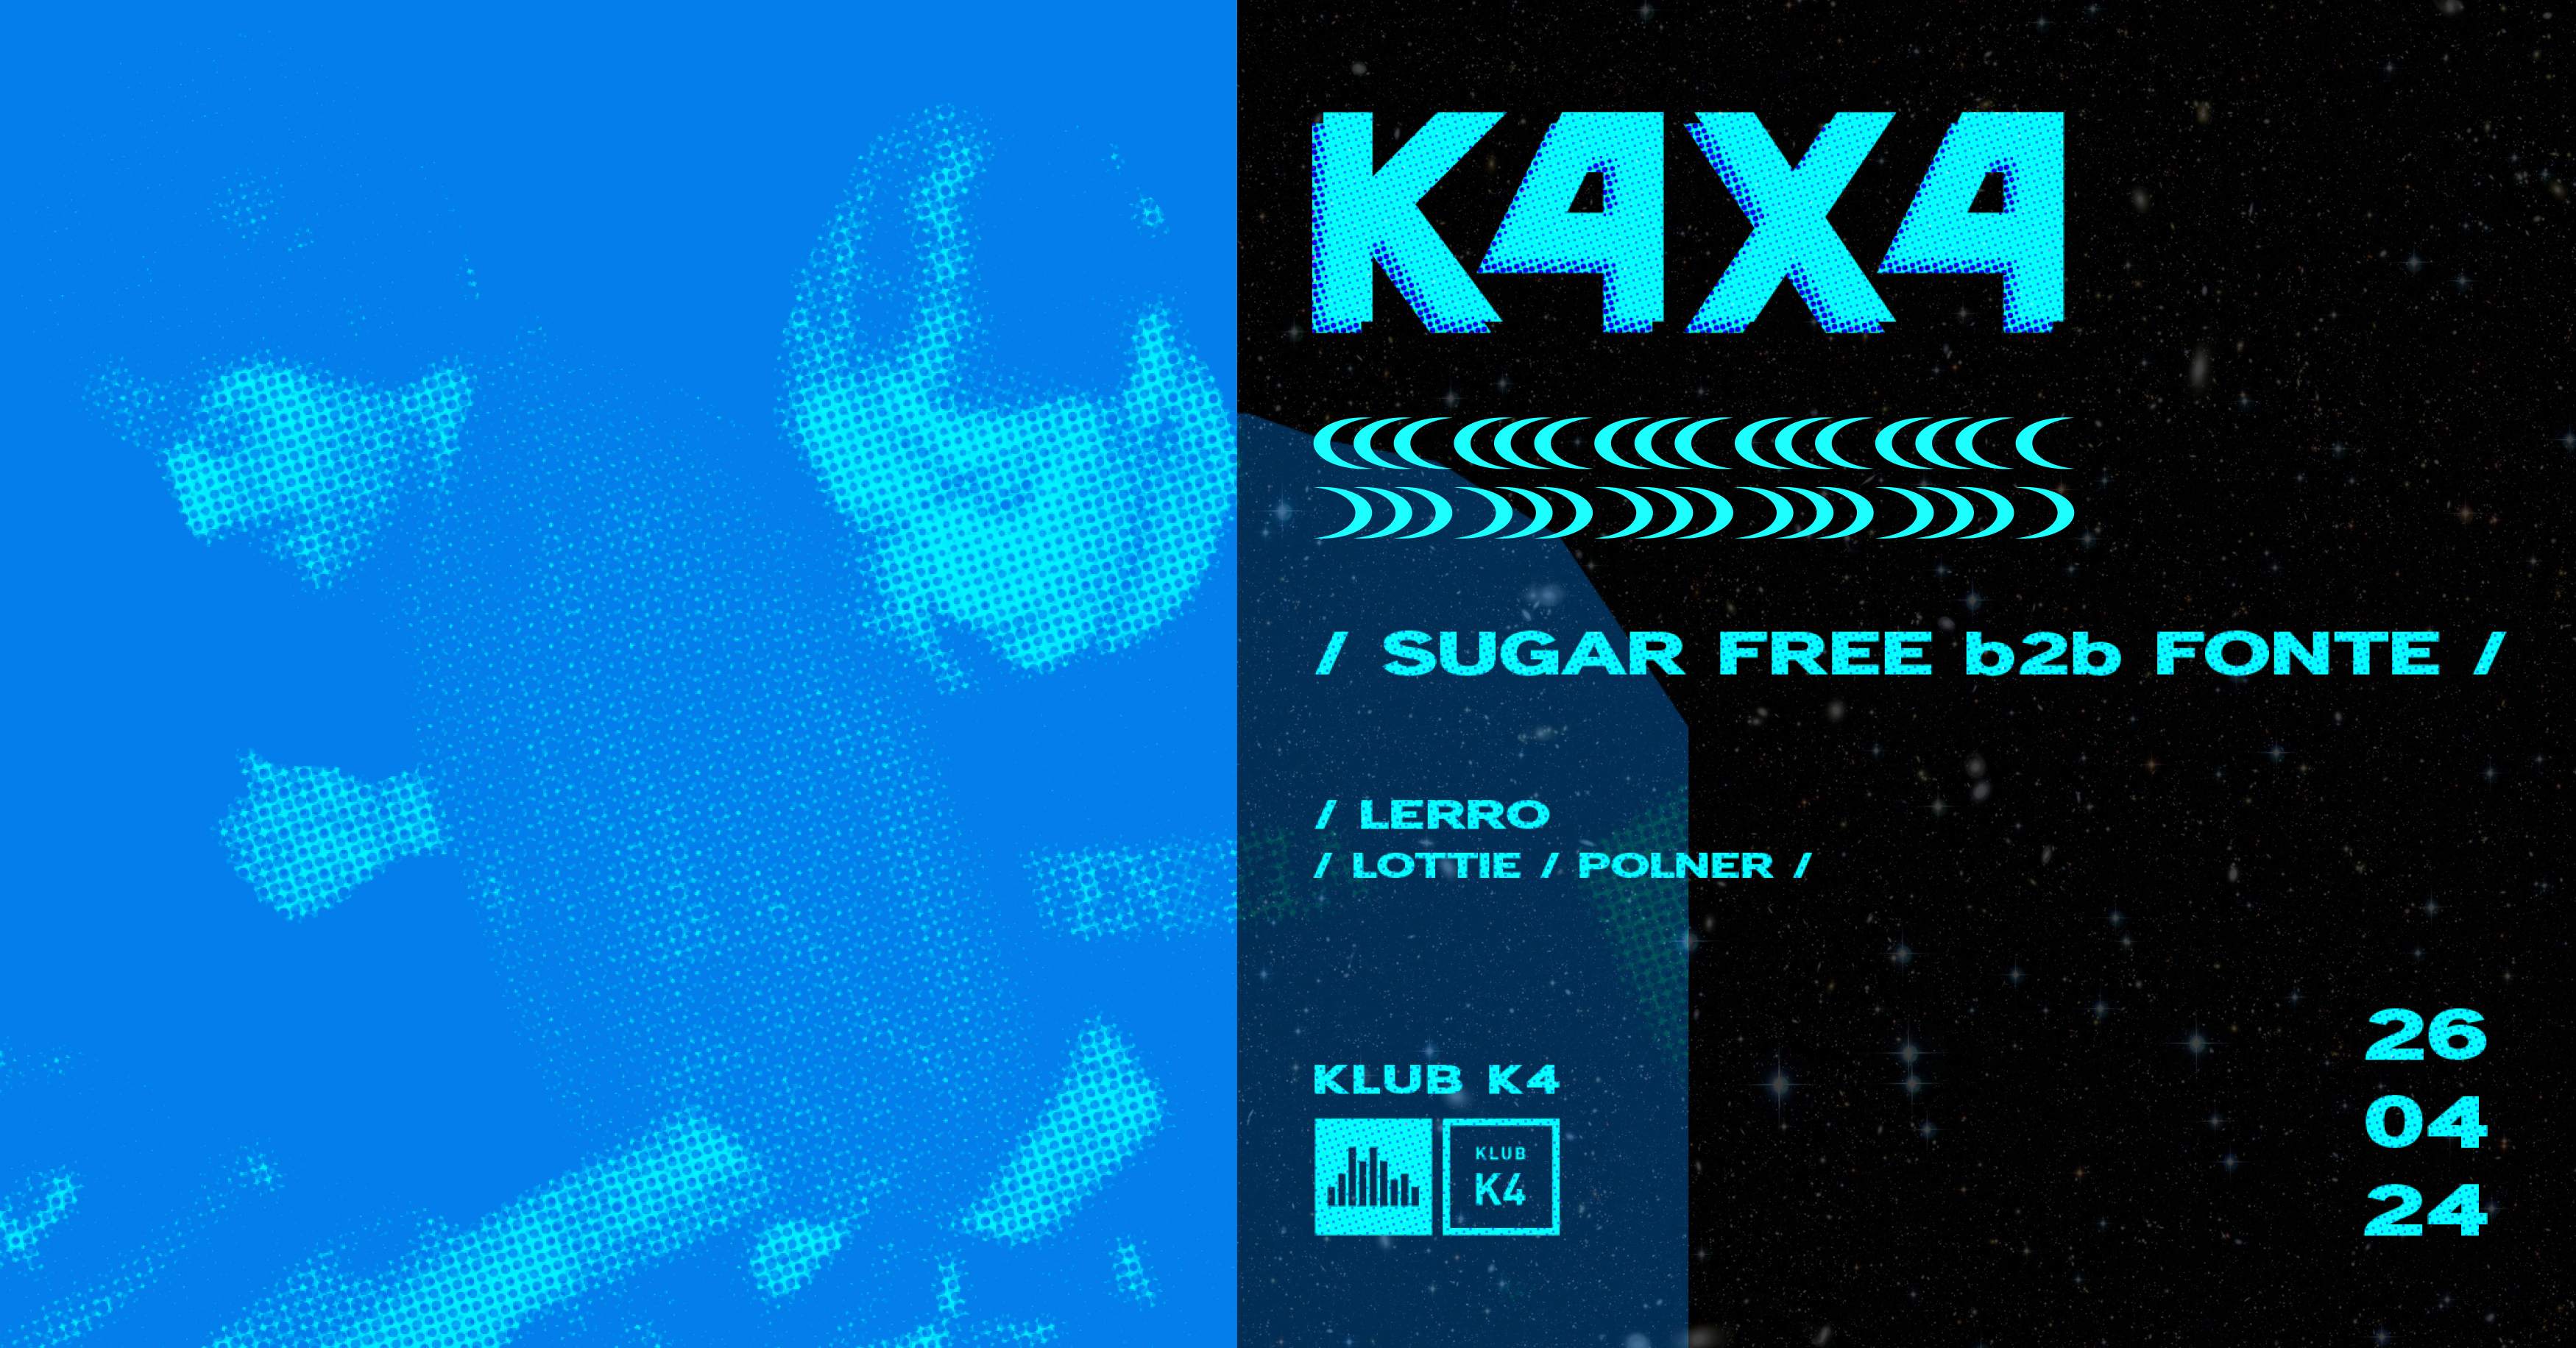 K4X4 with Sugar Free b2b Fonte - Página frontal